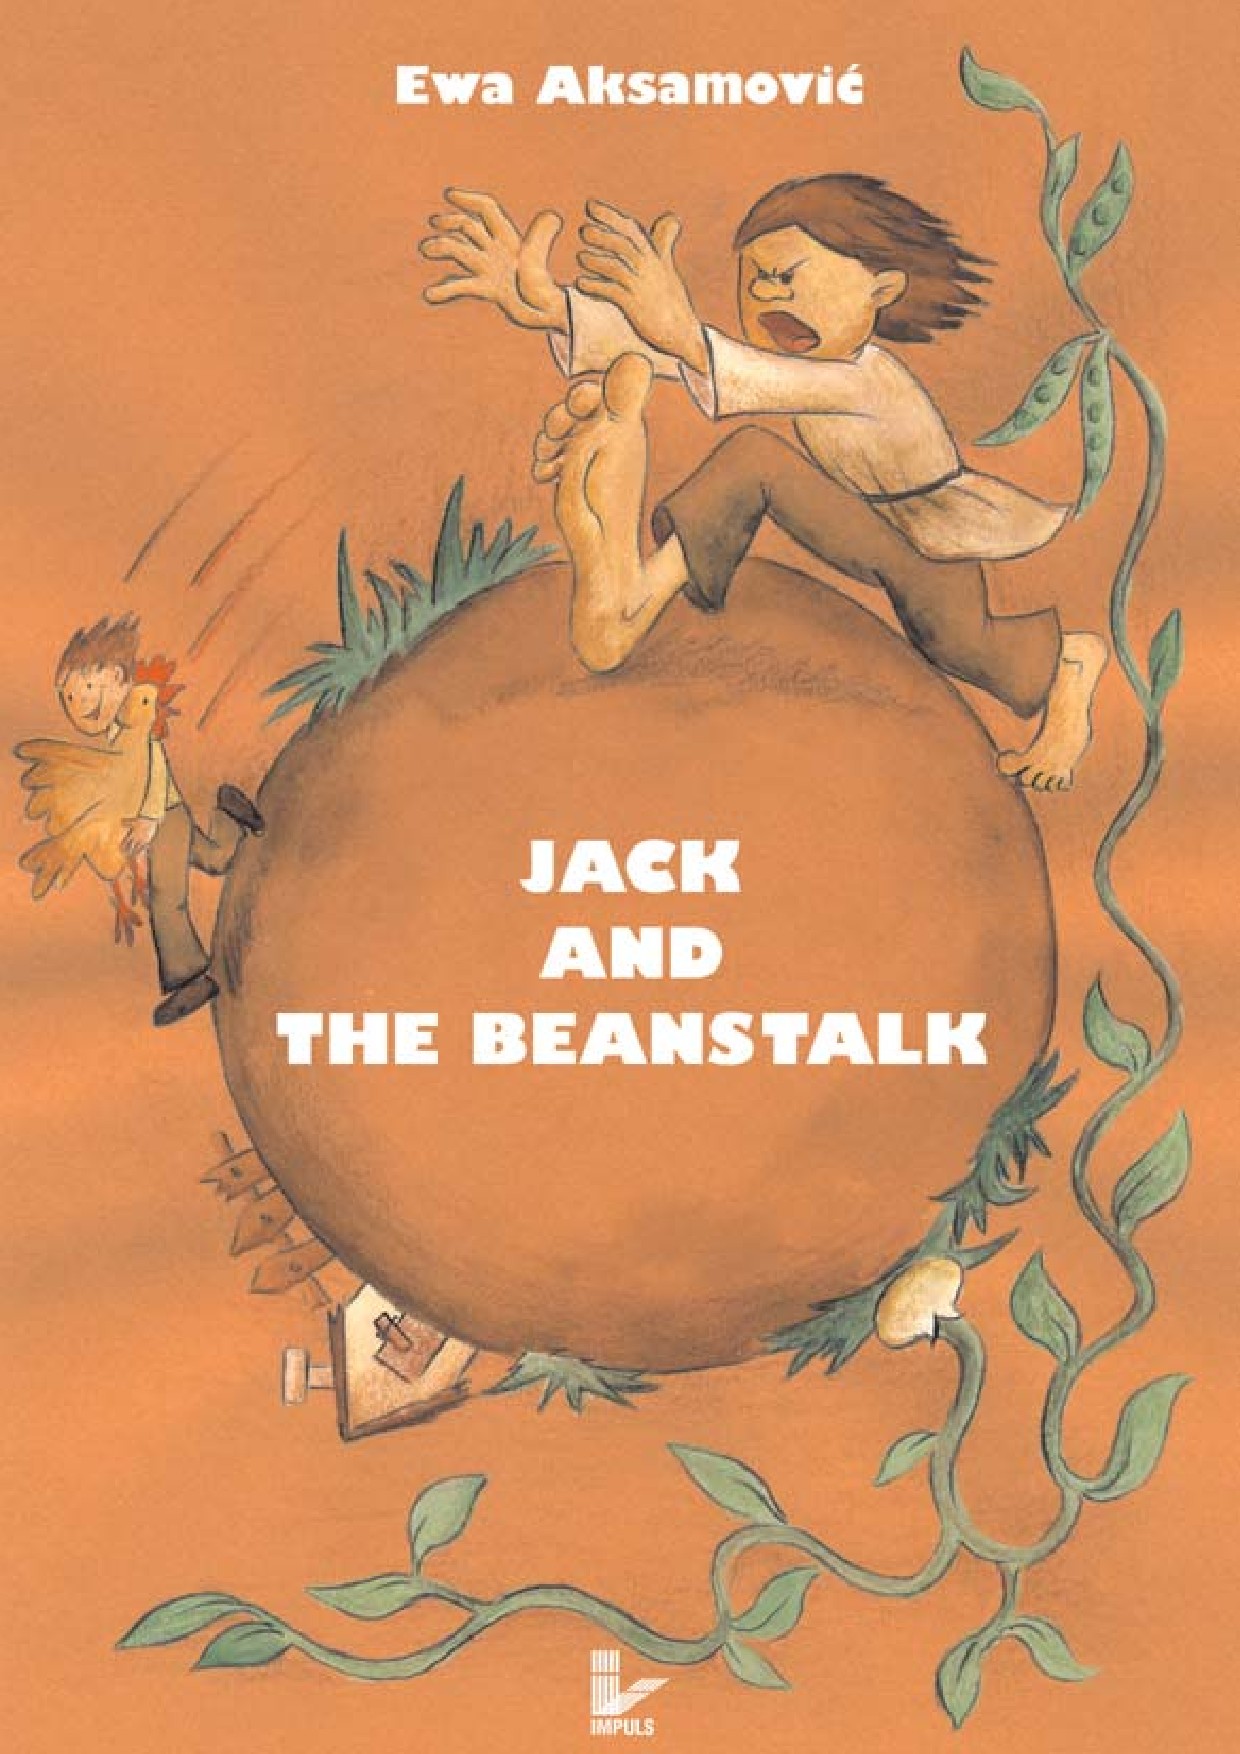 :: Jack and the Beanstalk - e-book ::